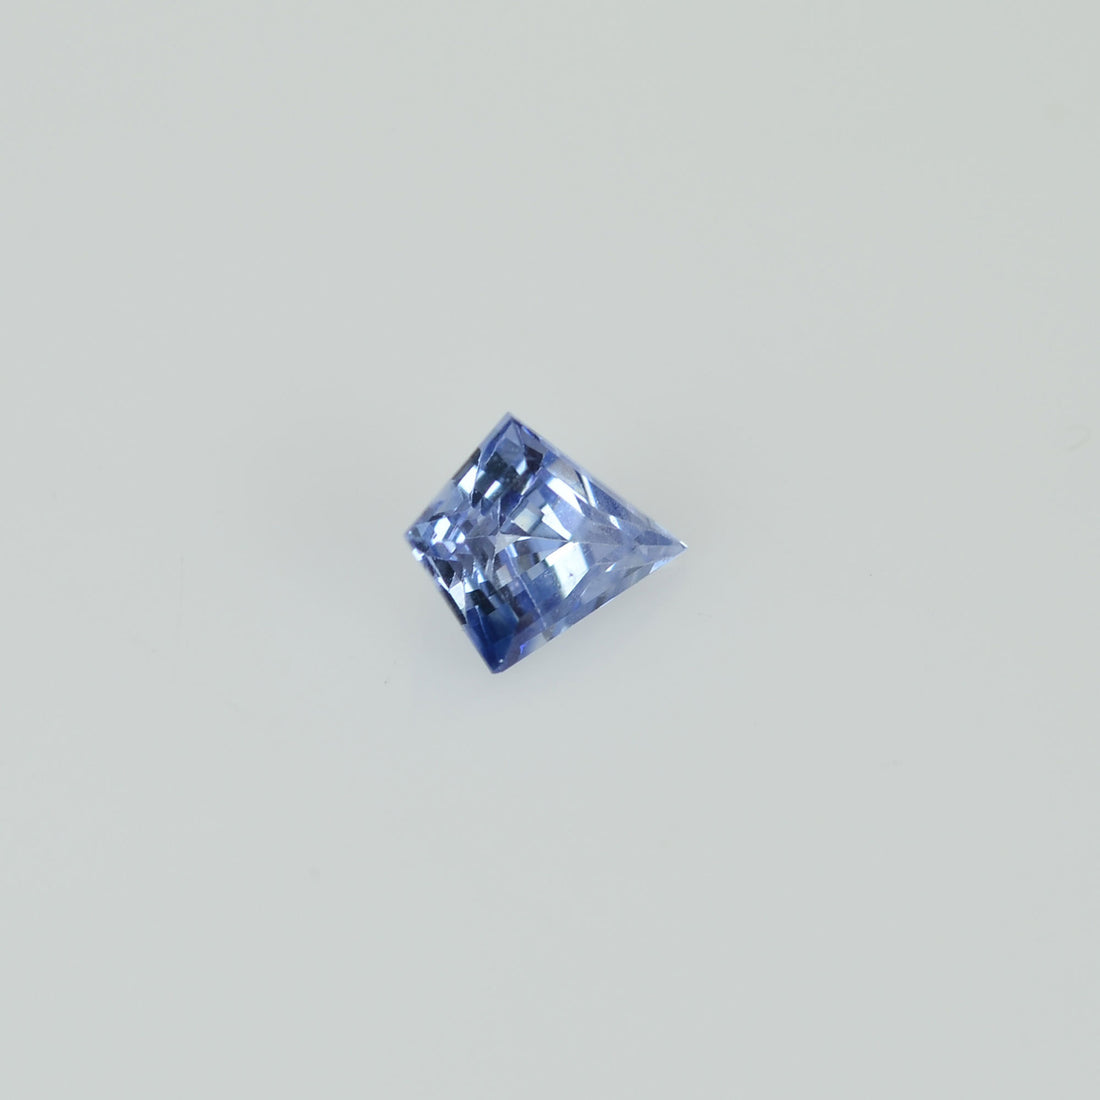 0.20 Cts Natural Blue Sapphire Loose Gemstone Fancy Kite/Trillion Cut - Thai Gems Export Ltd.